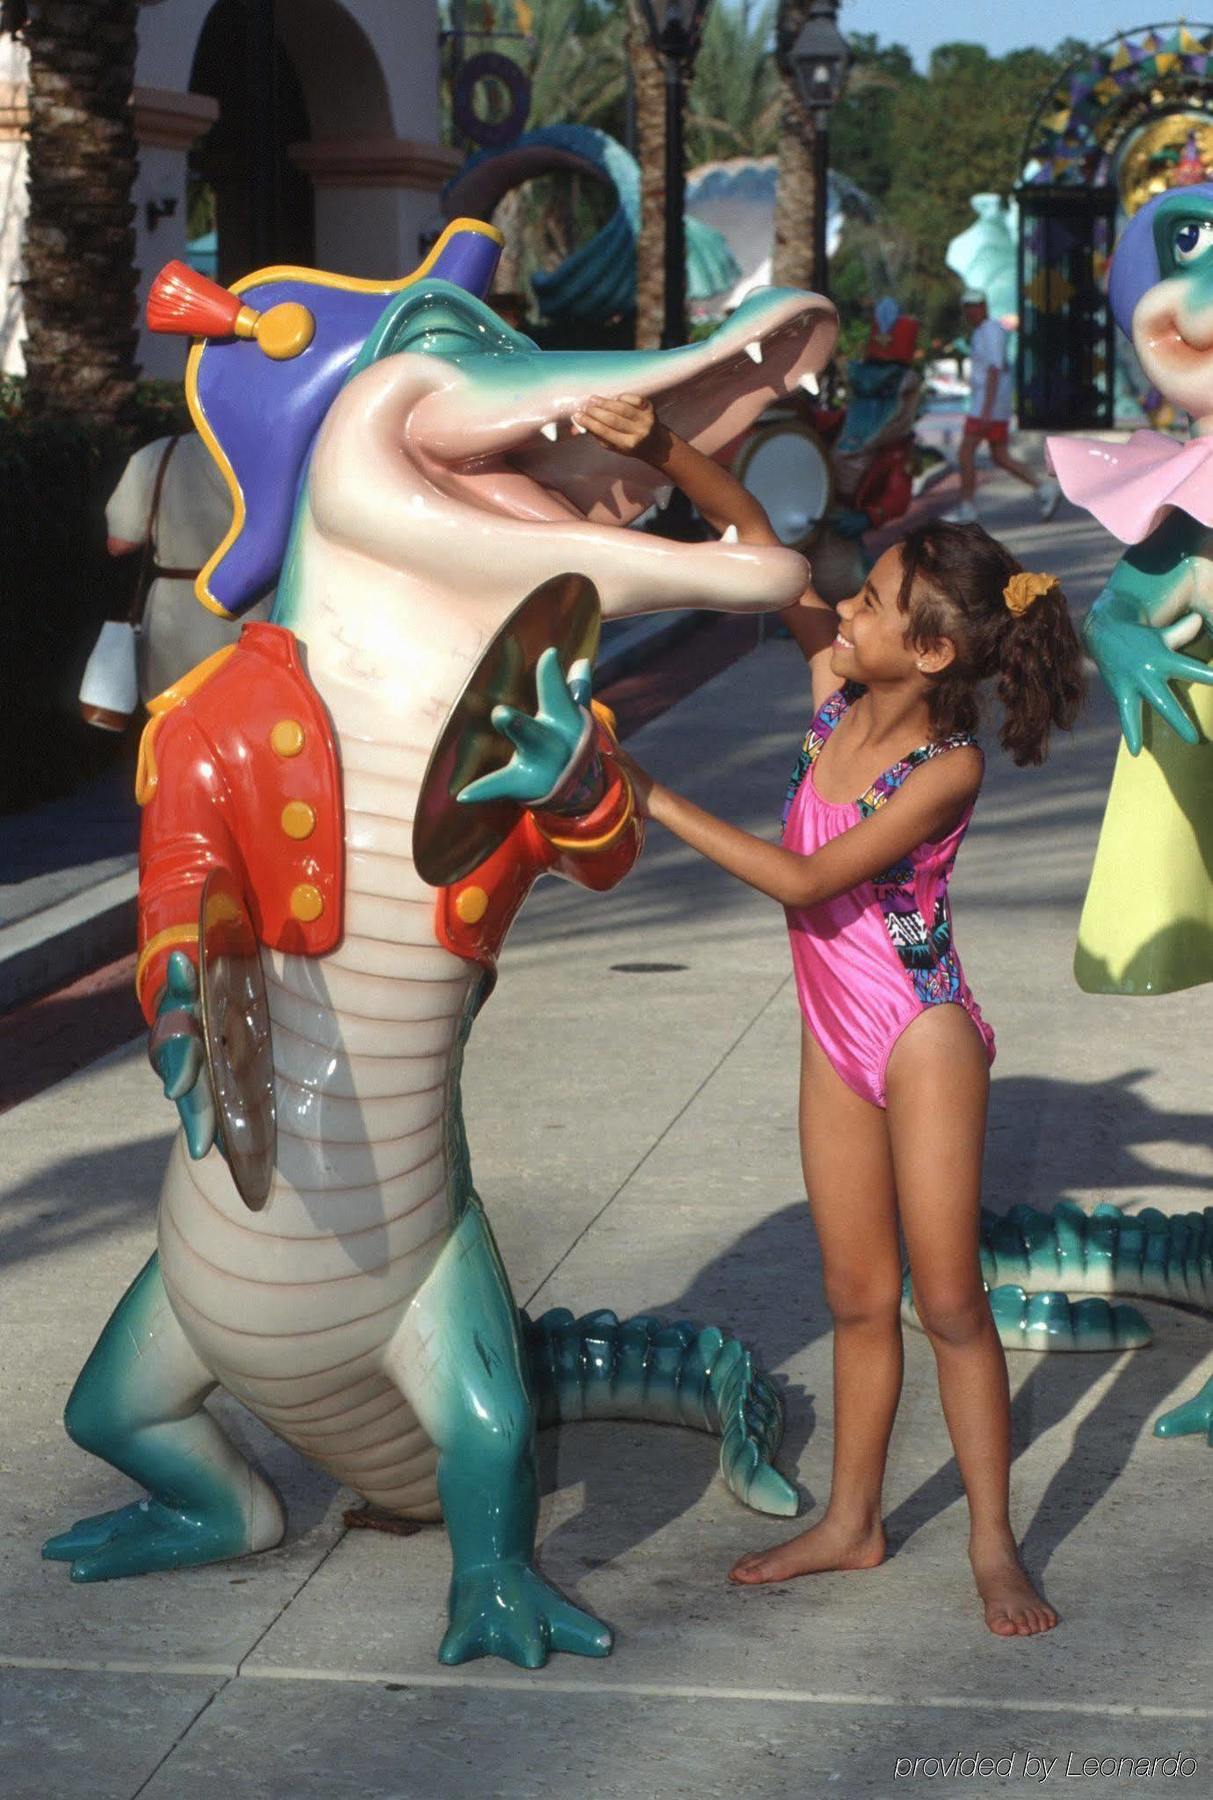 Disney'S Port Orleans Resort - French Quarter 레이크 부에나 비스타 외부 사진